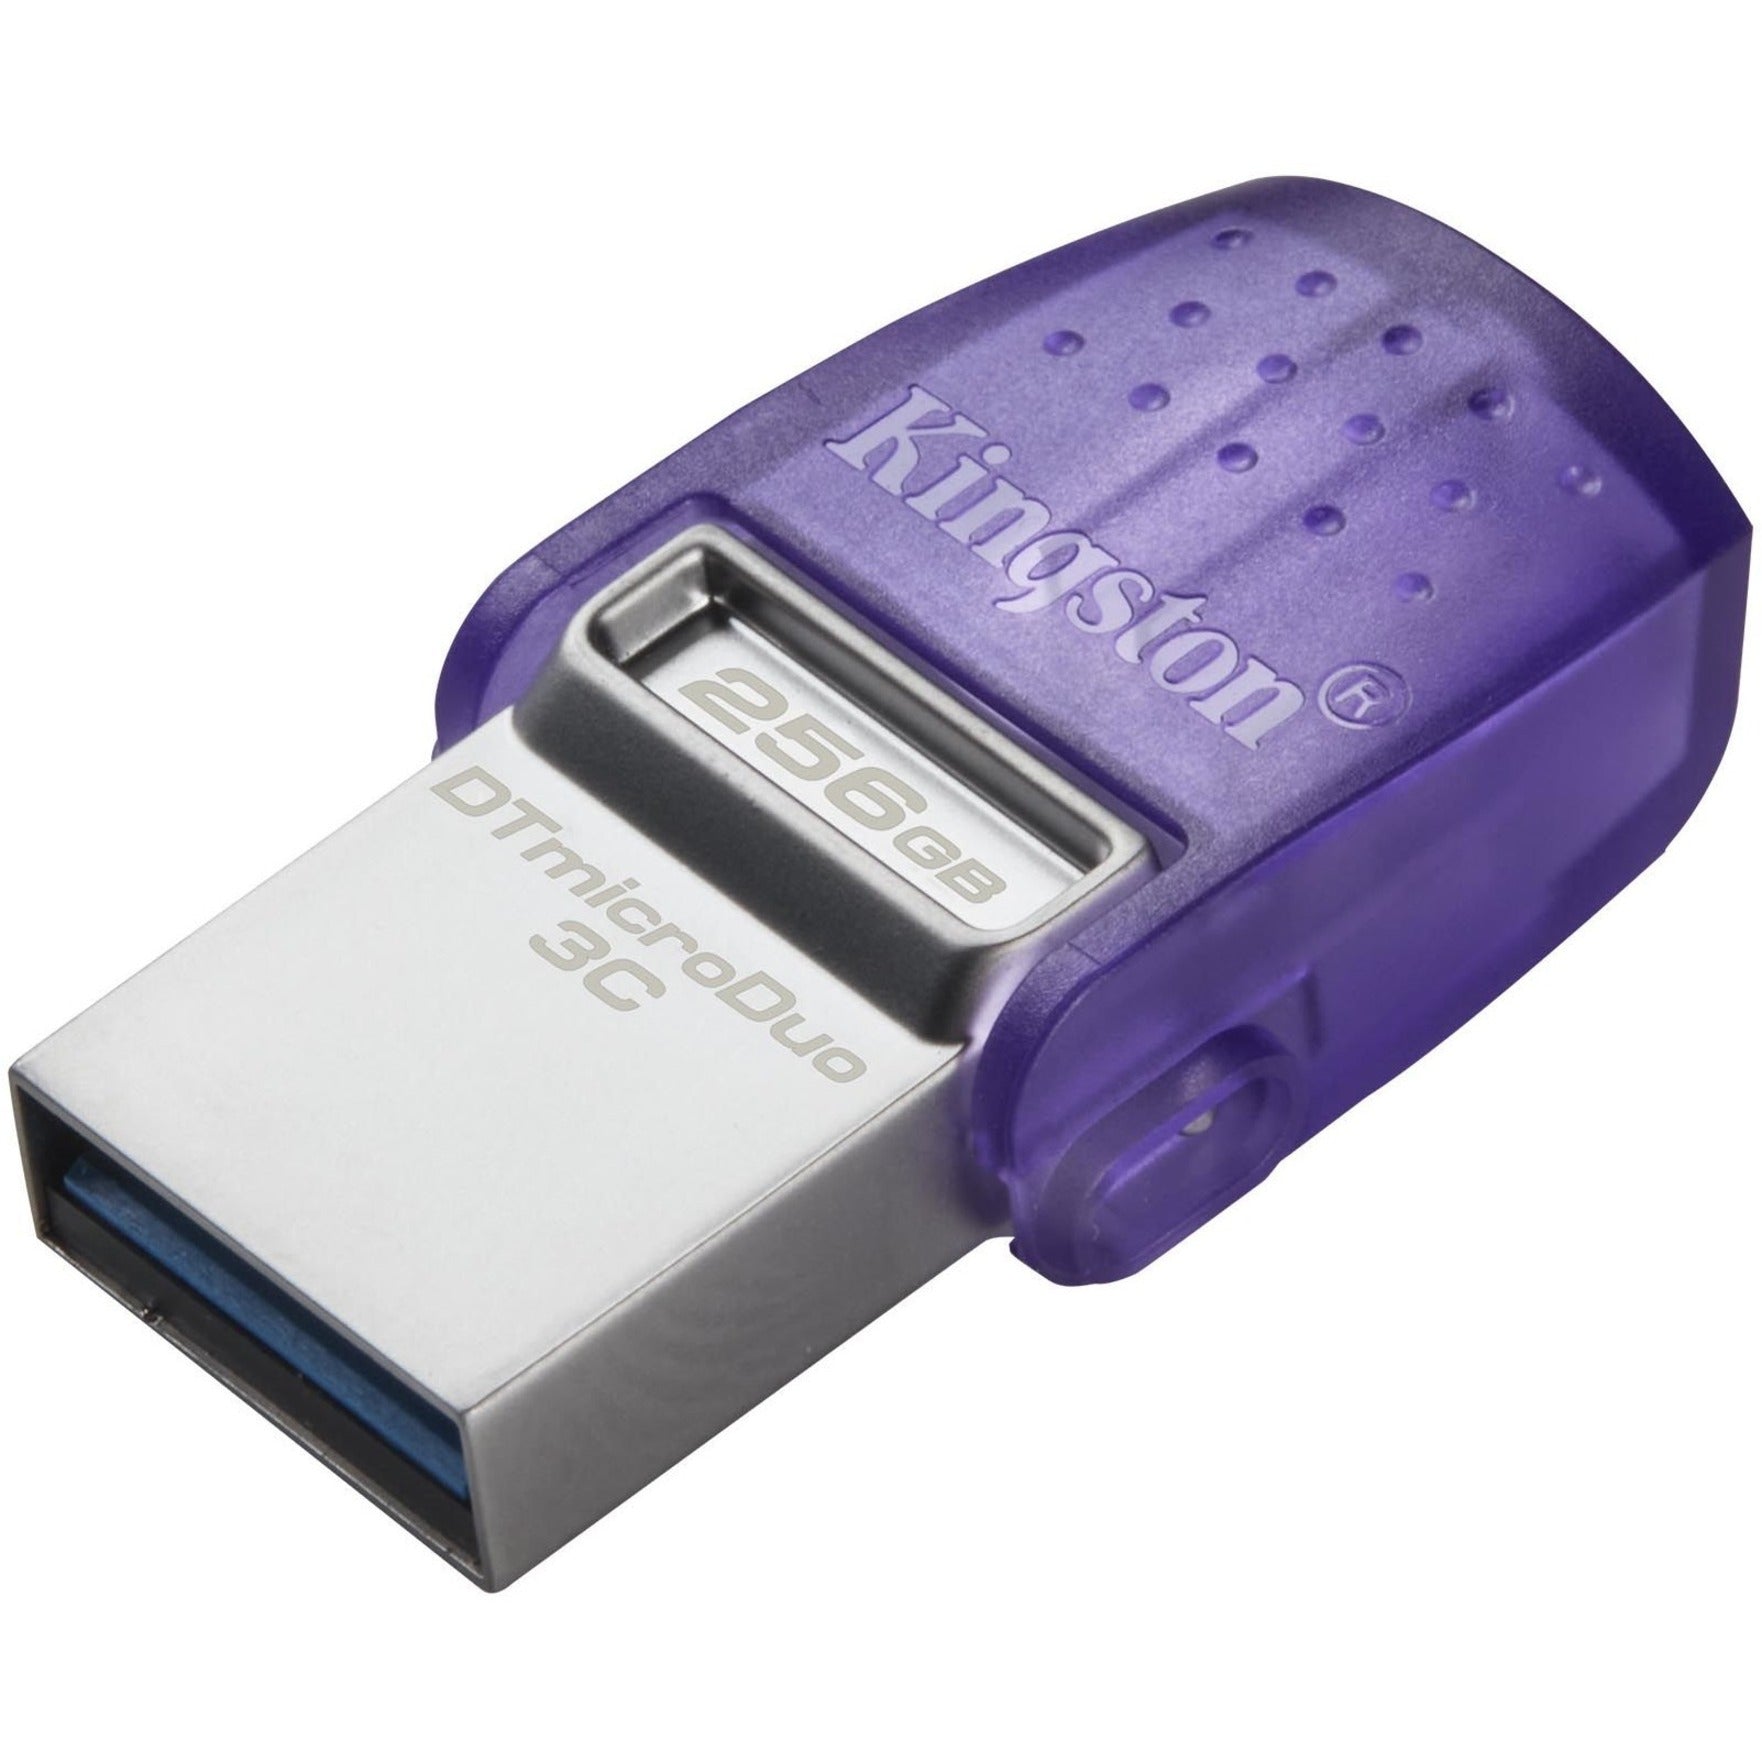 Kingston DTDUO3CG3/256GB DataTraveler microDuo 3C USB Flash Drive 256GB Storage Purple  キングストン DTDUO3CG3/256GB データトラベラー microDuo 3C USB フラッシュドライブ、256GB ストレージ、パープル